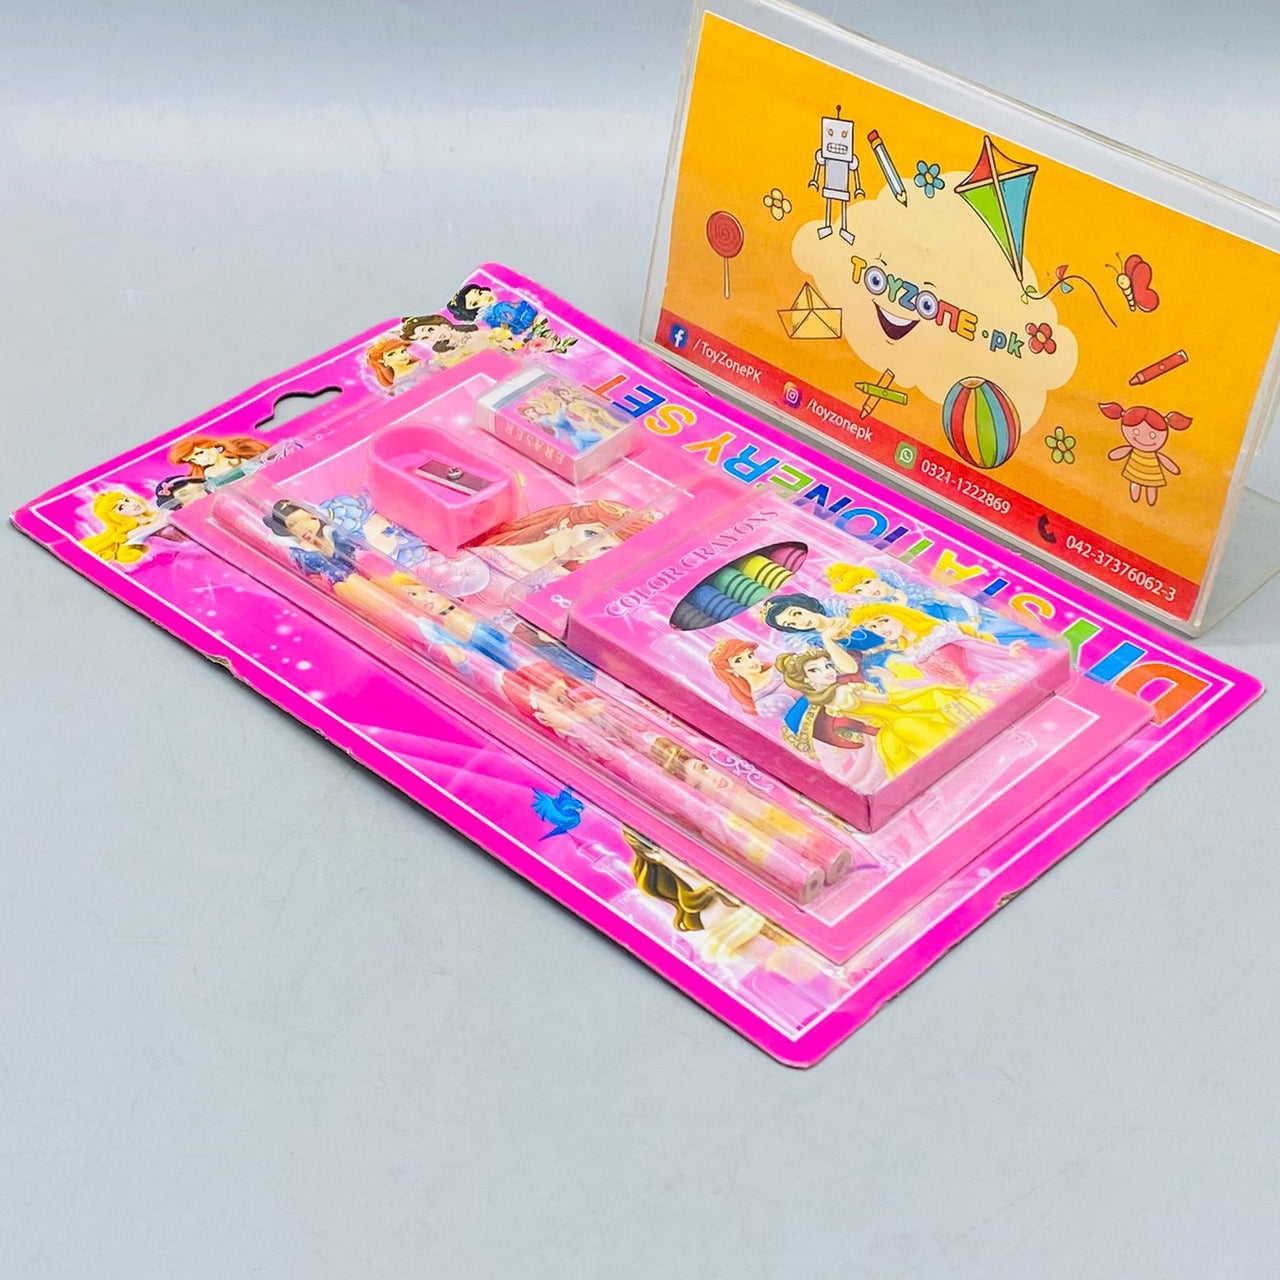 Disney Princess Stationery Set for Girls